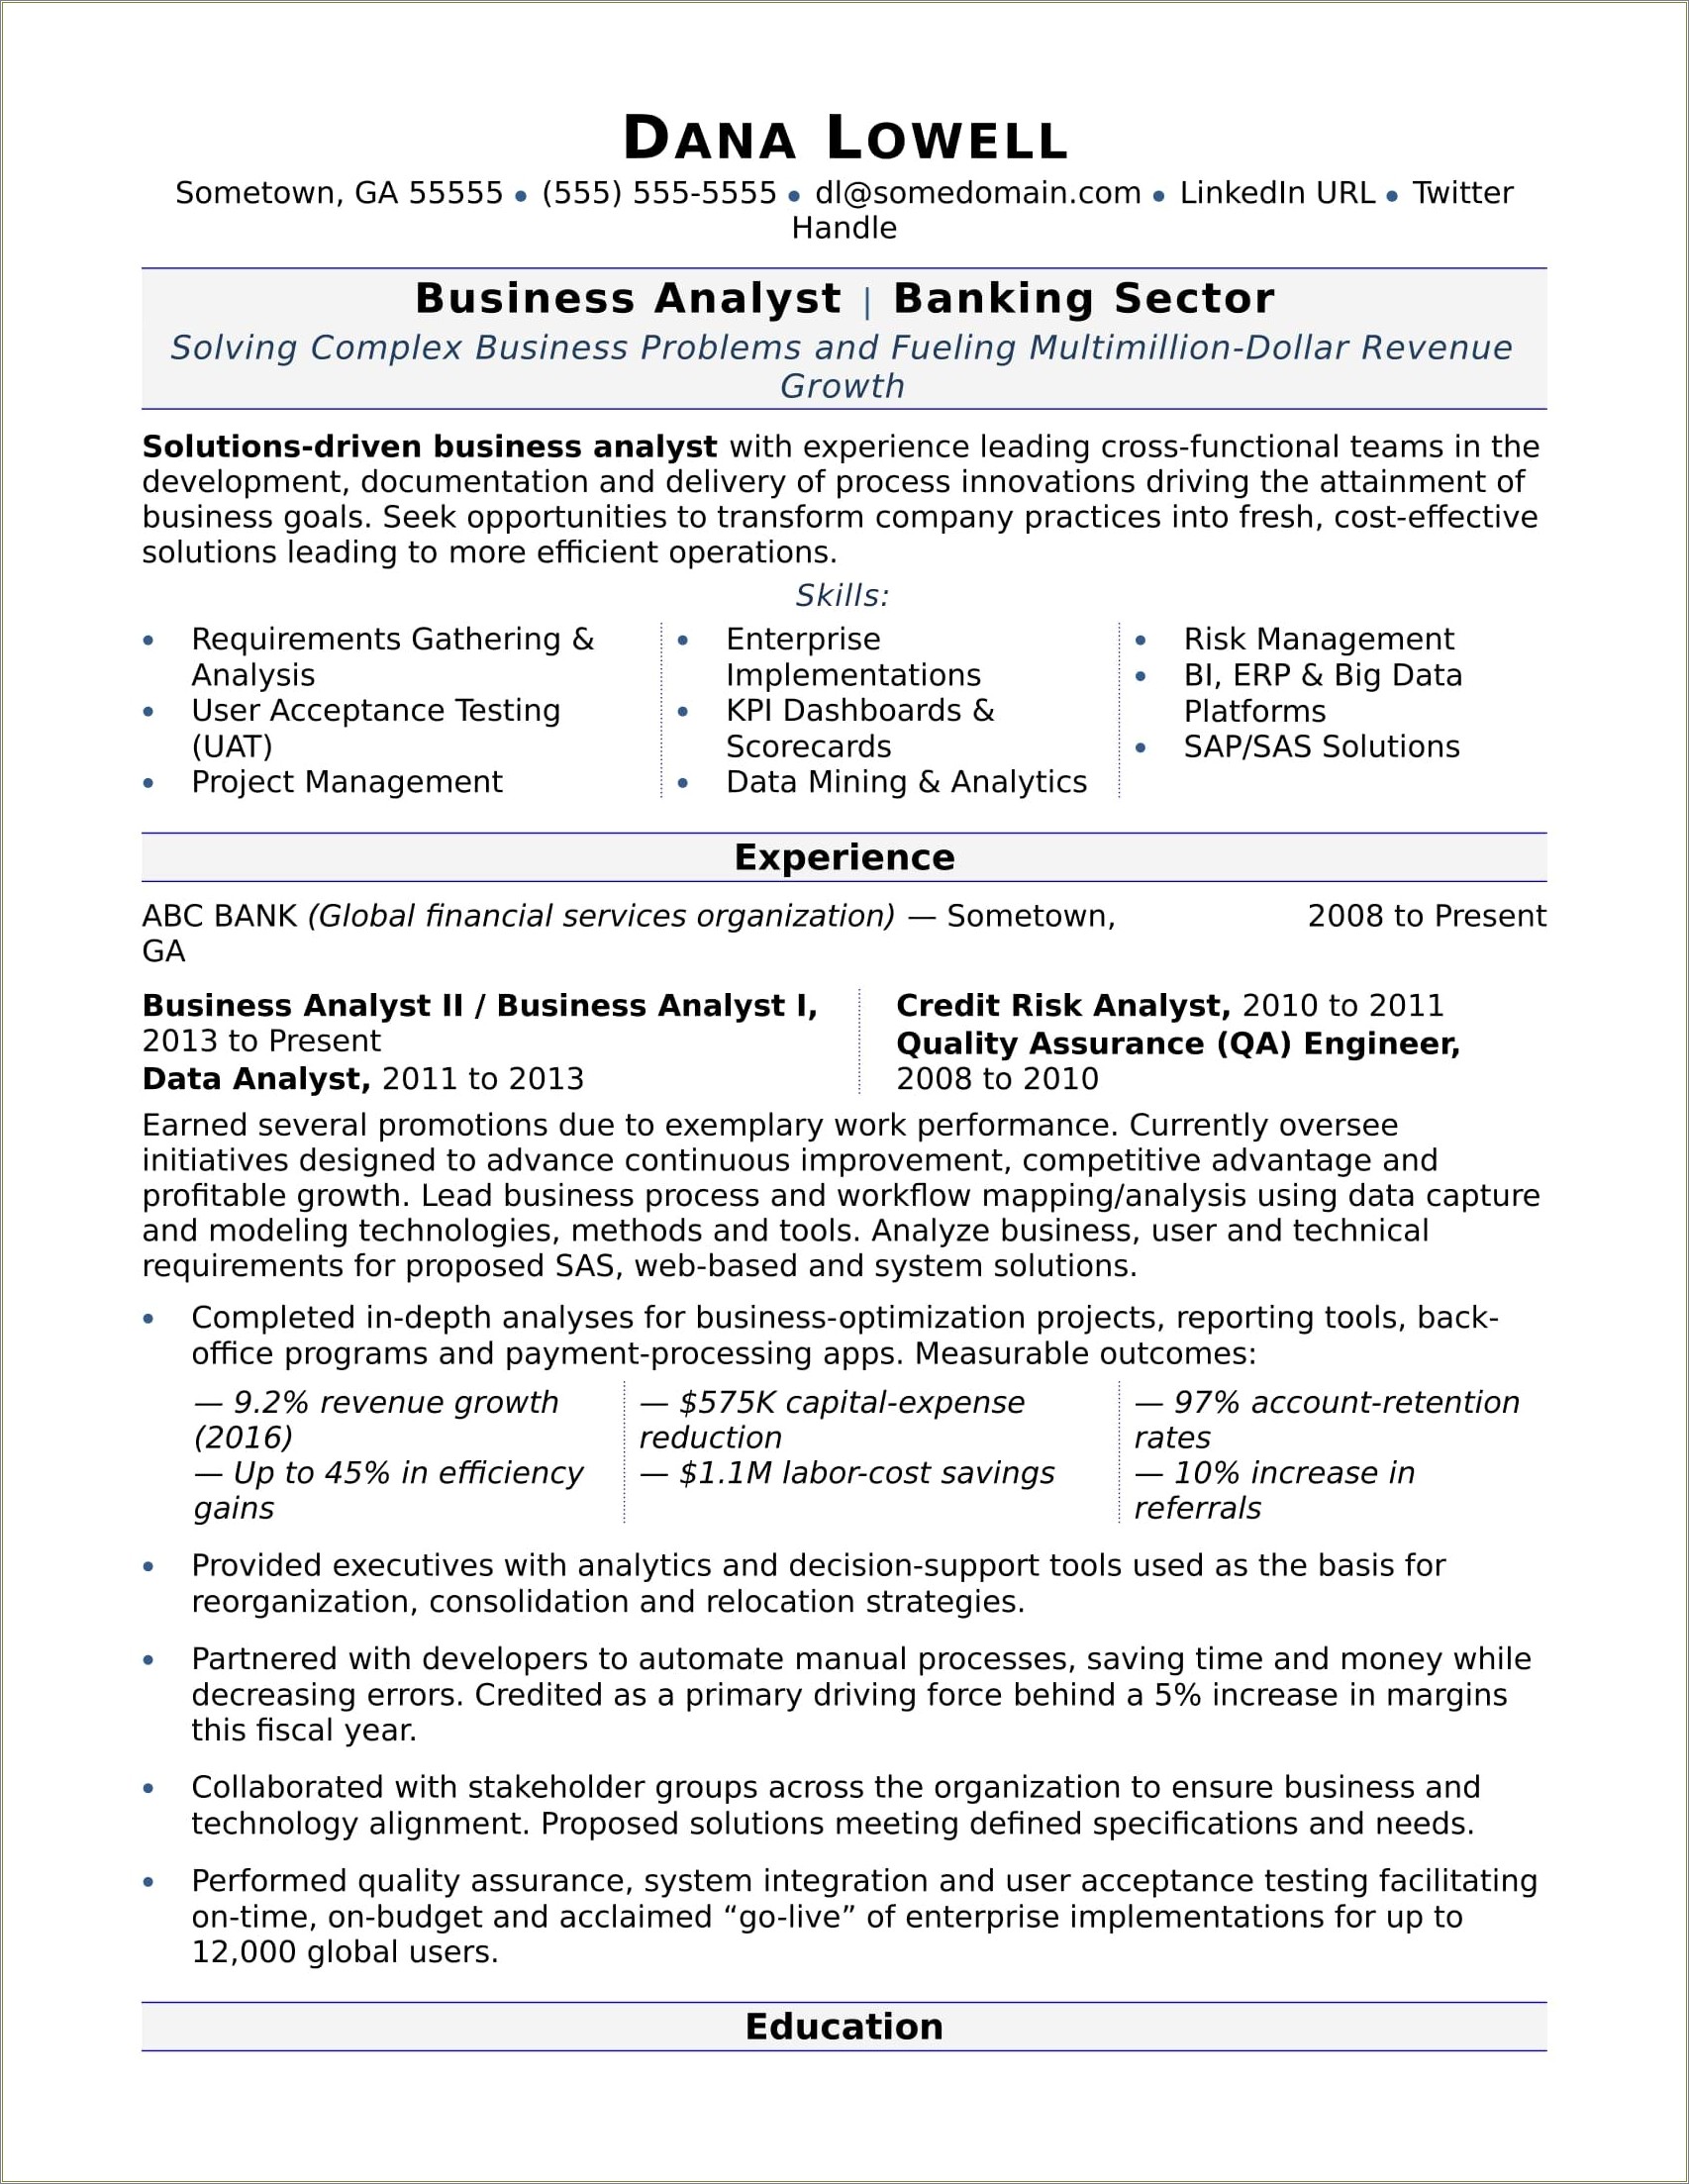 Sample Resume For Junior Financial Analyst